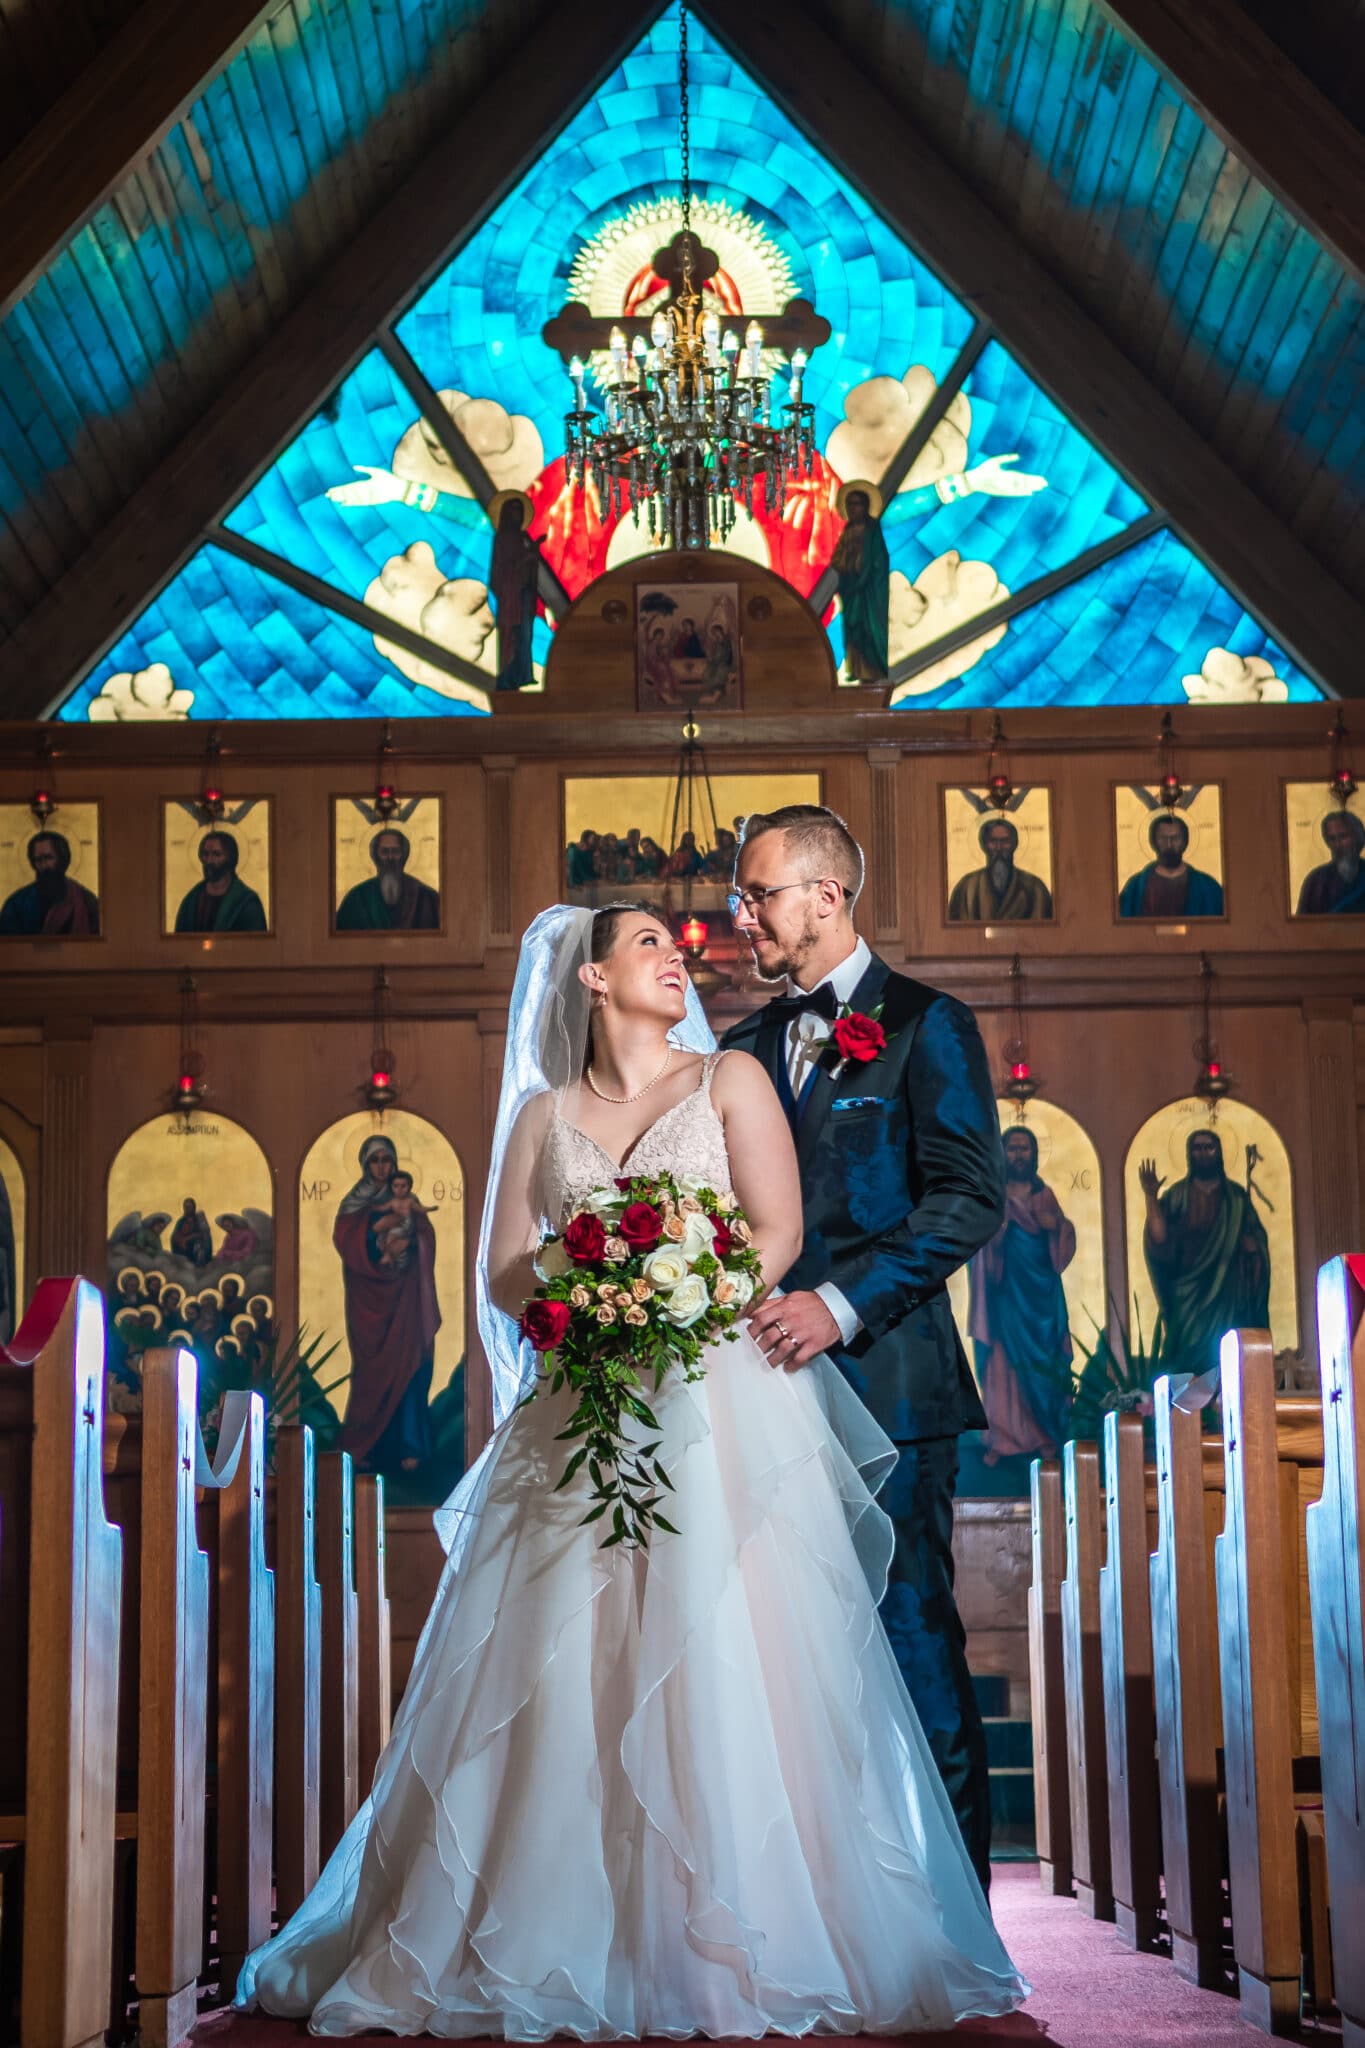 Lighting Styles in Wedding Photography 9